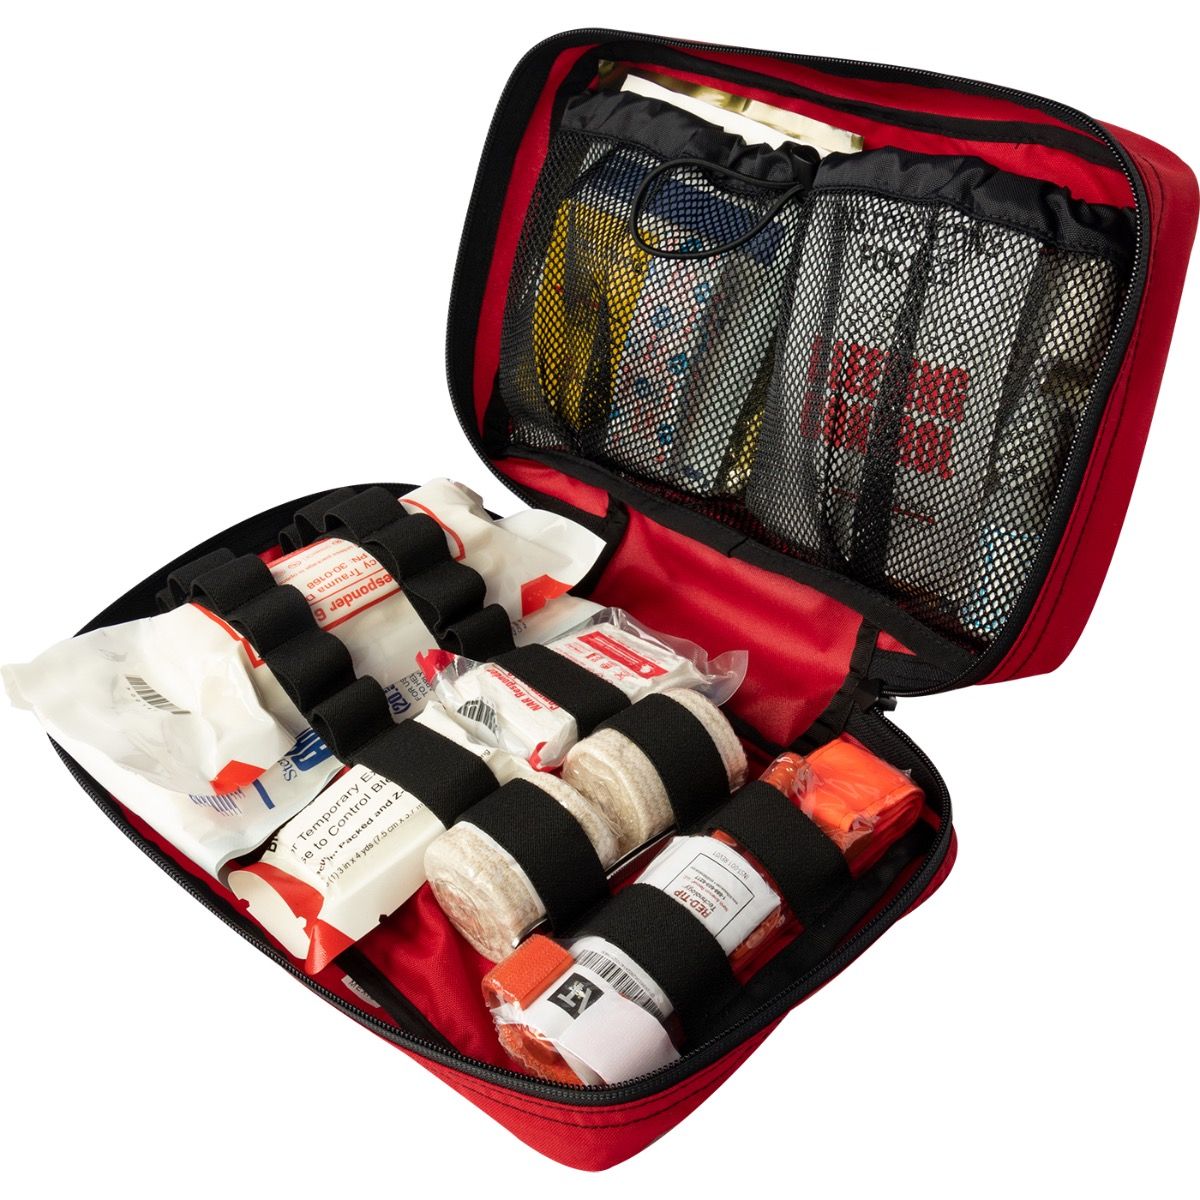 NAR Mini First Aid Kit Nylon Bags